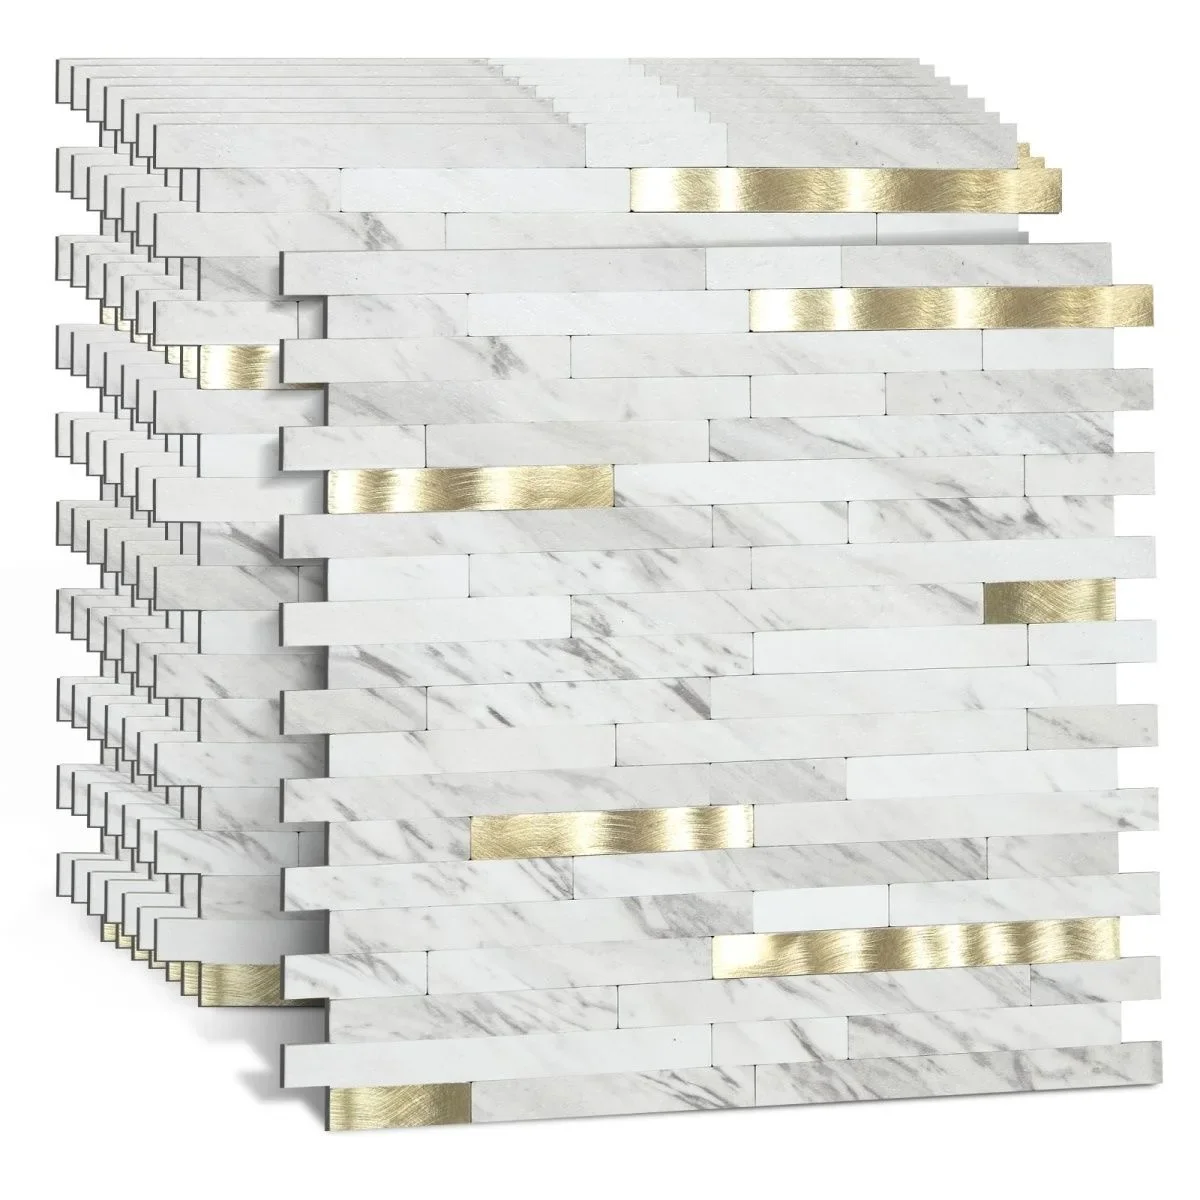 

11pcs/lot Mosaic Wall Tile Peel And Stick Self Adhesive Waterproof Aluminum composite rectangle Kitchen Bath Tile Backsplash